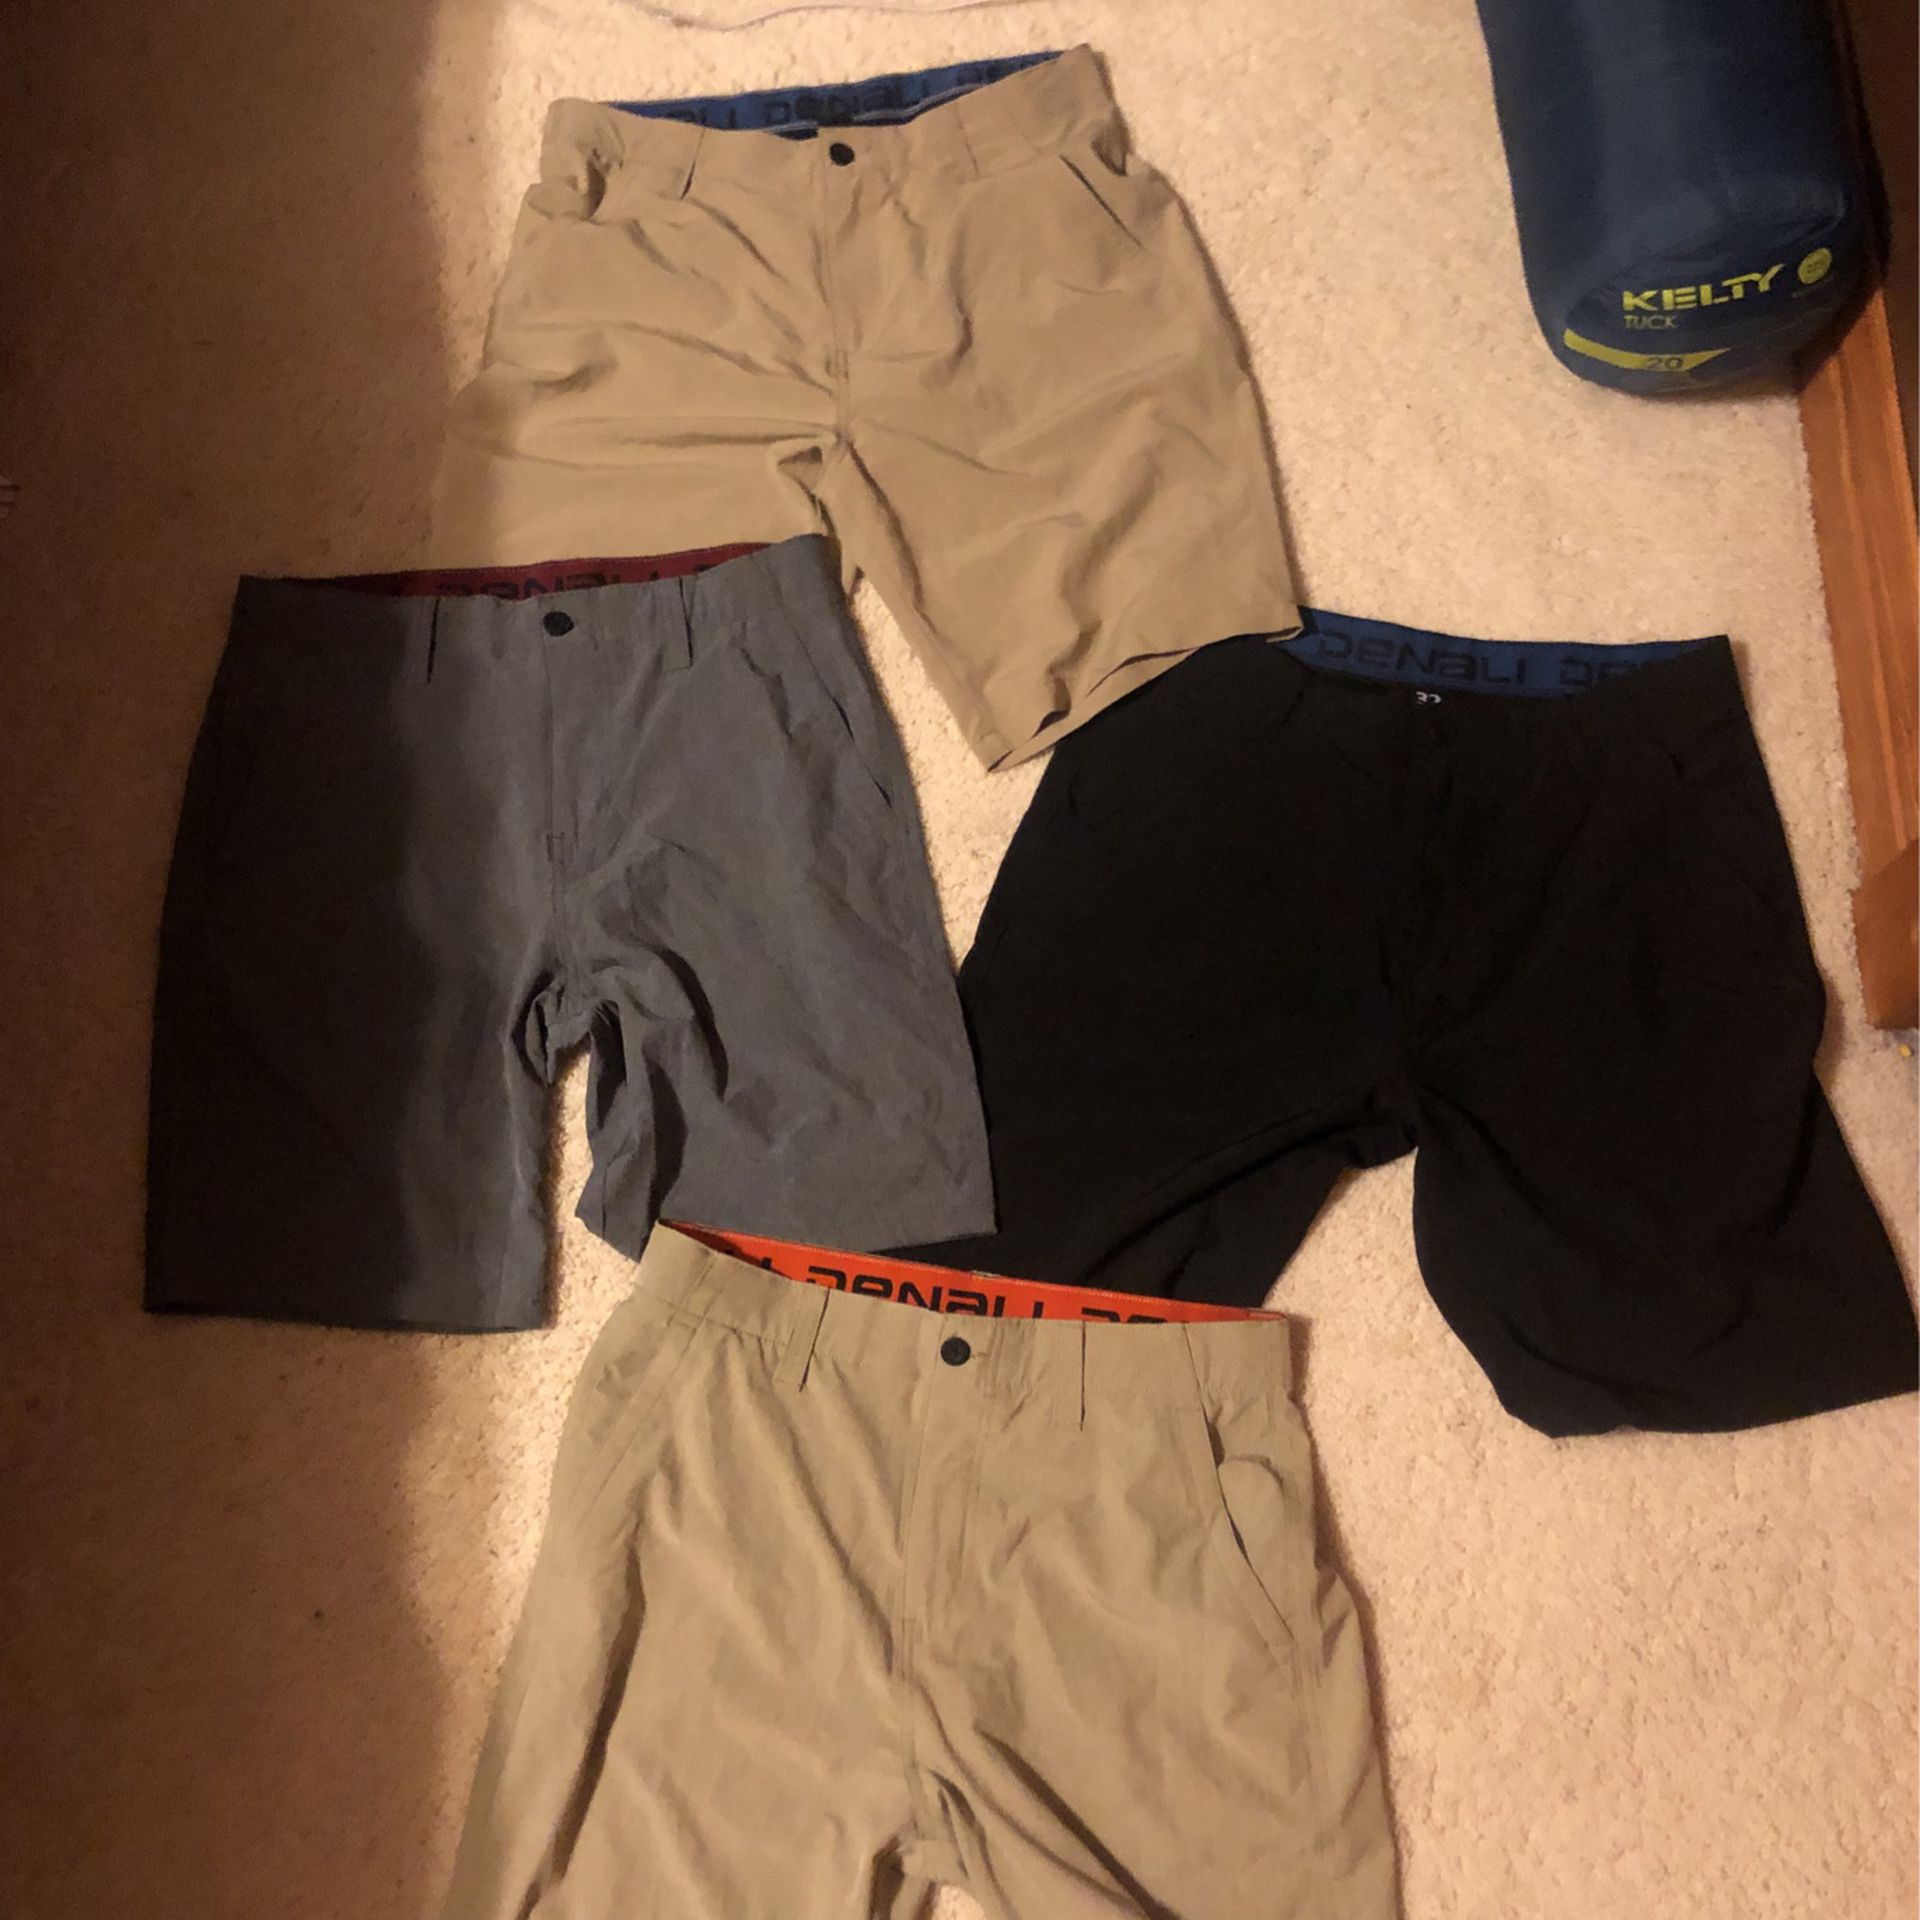 Denali Dri-Fit Golf shorts size 32